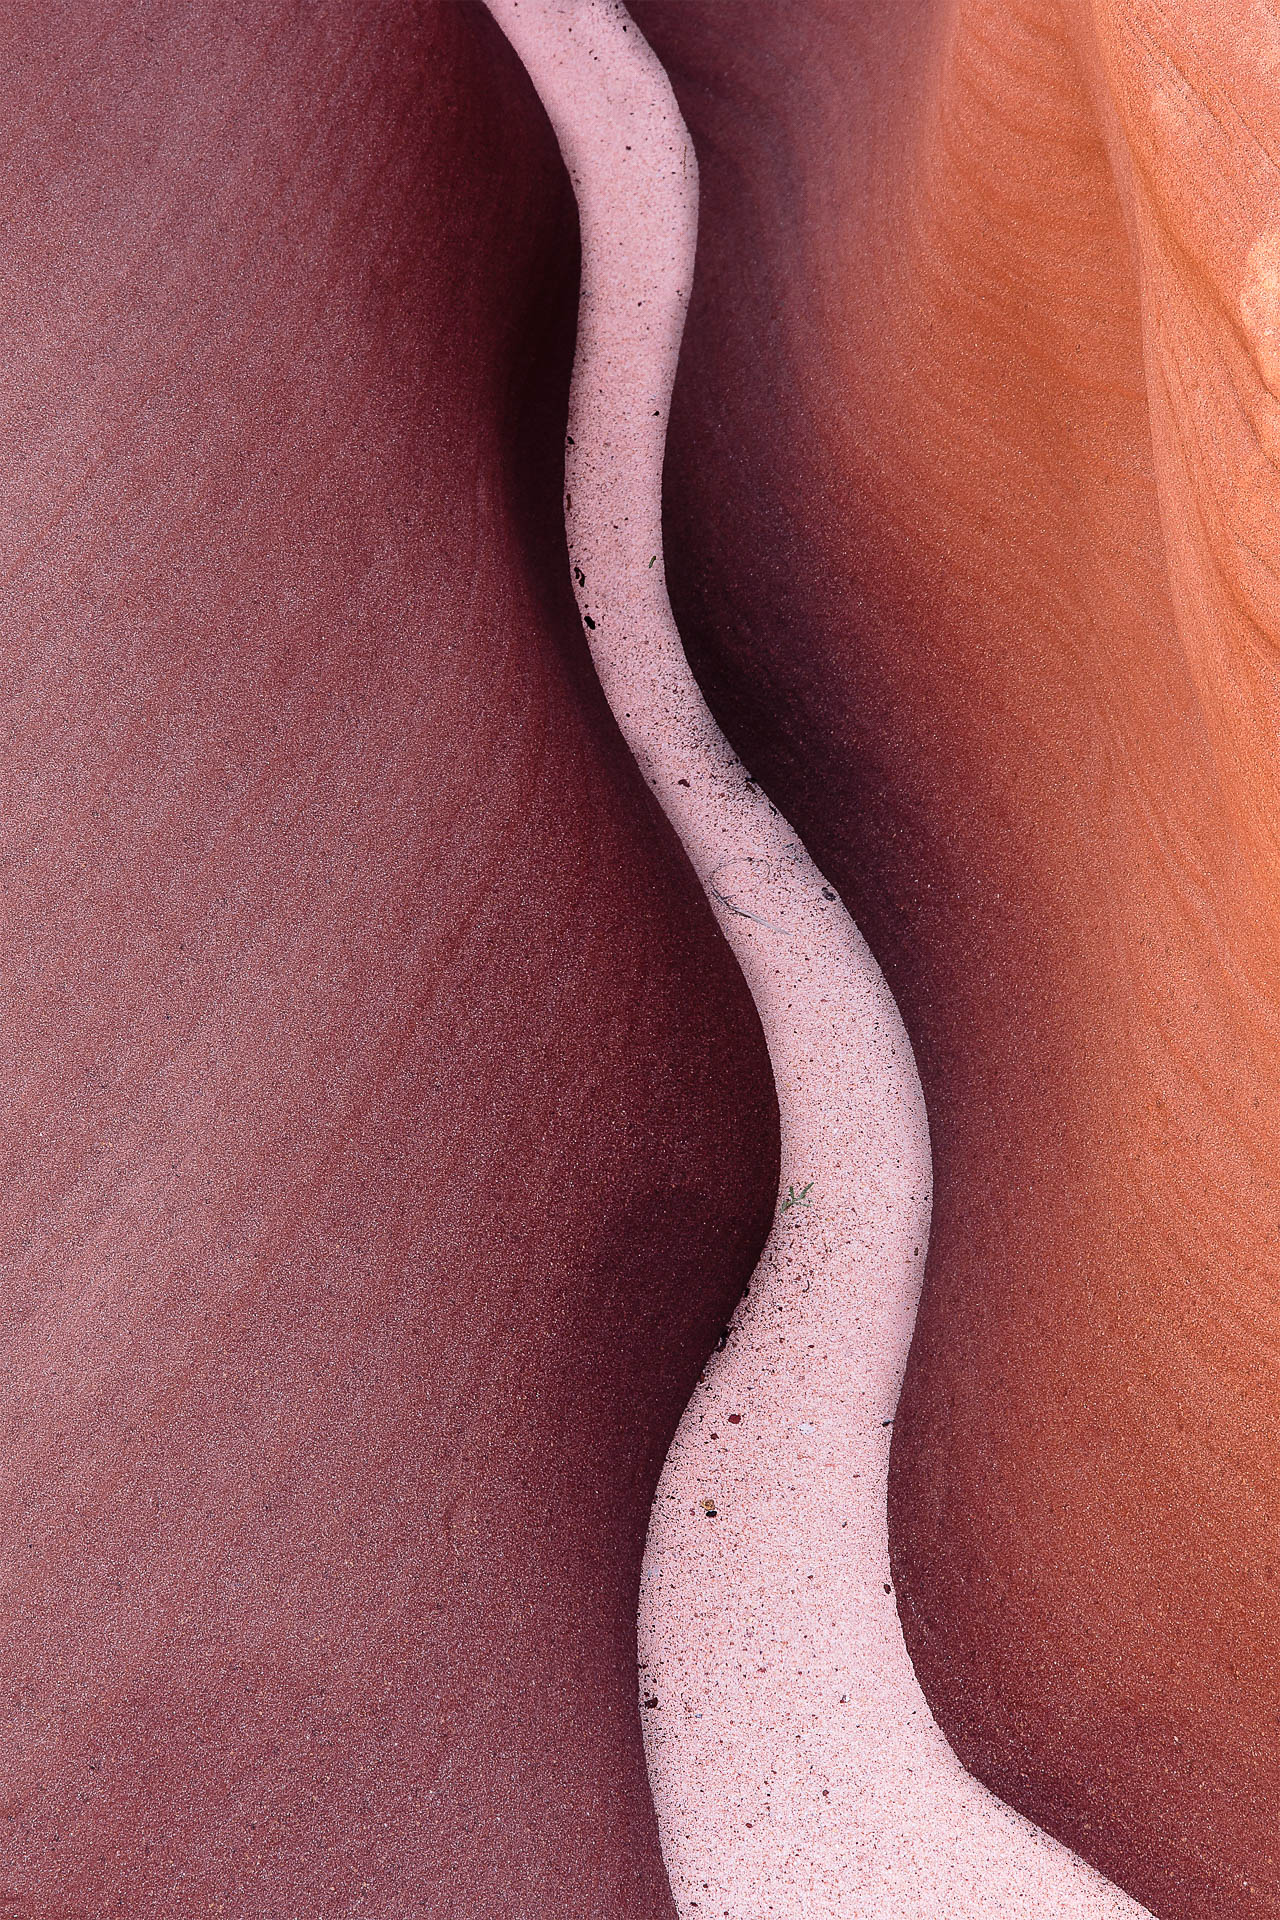 The Sand Snake